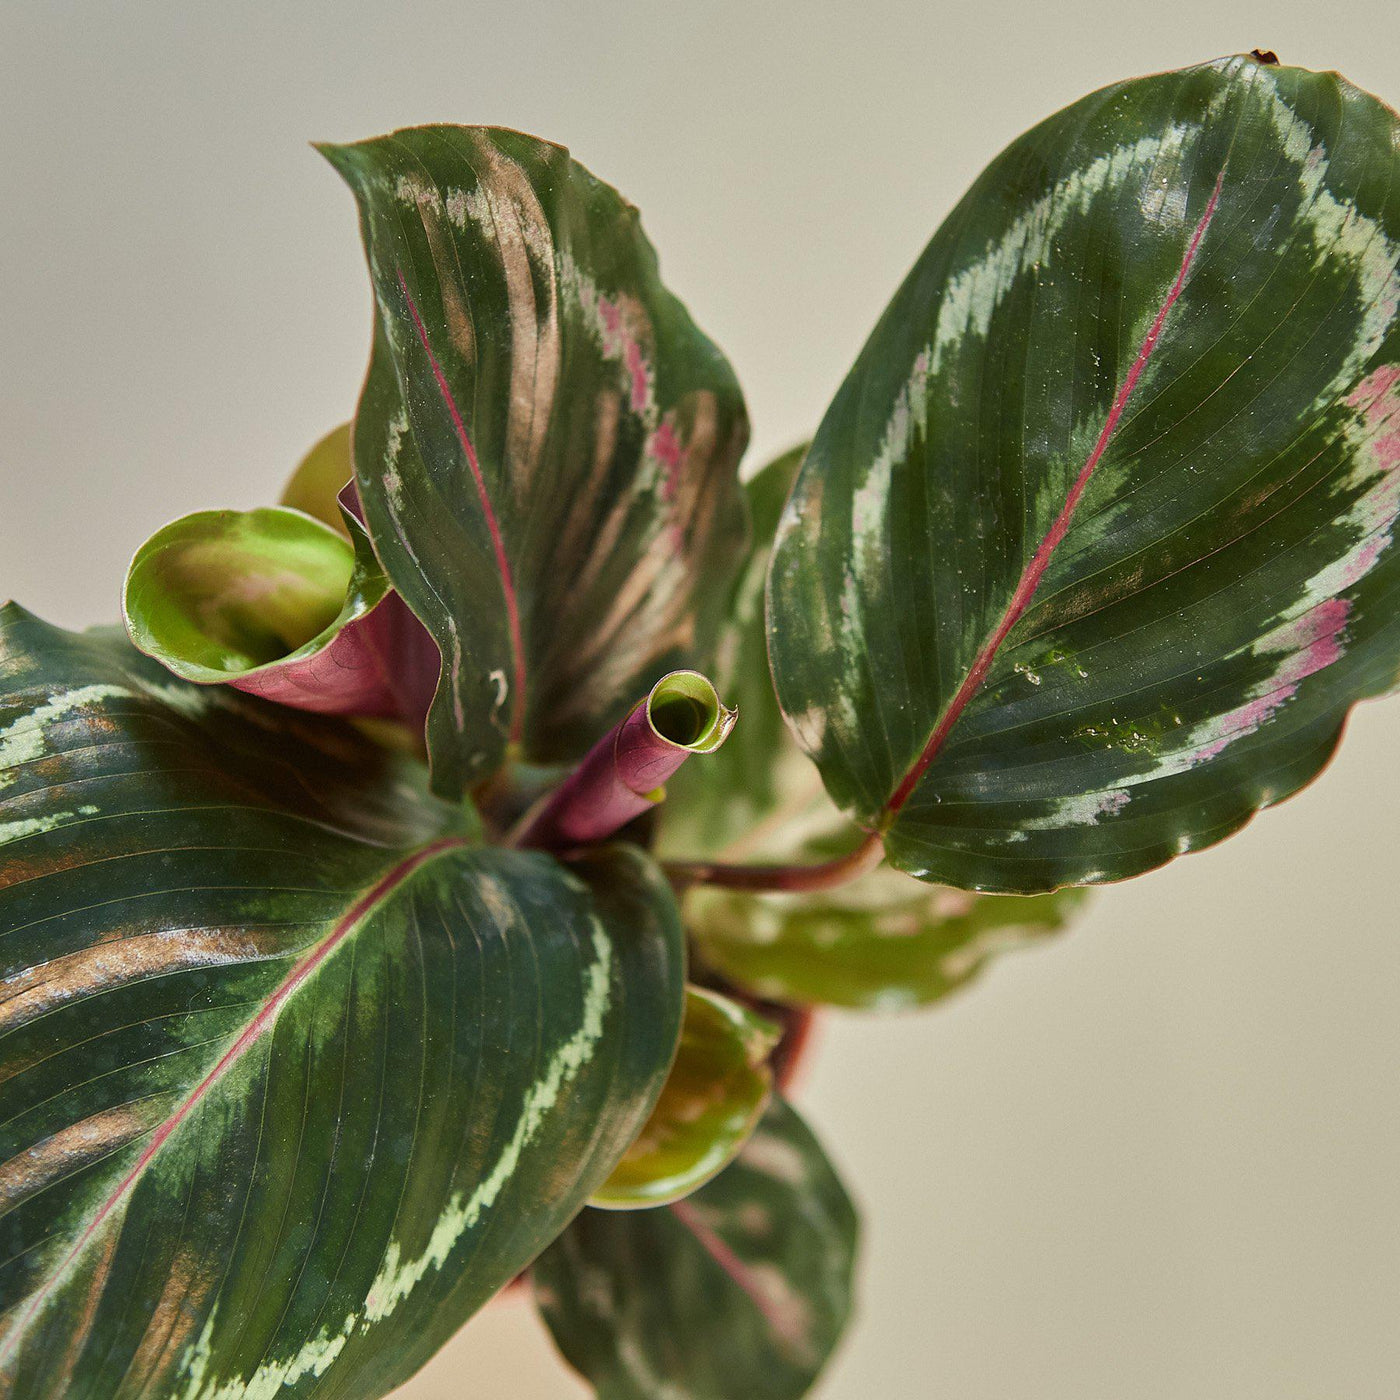 Calathea Roseopicta 'Medallion' by House Plant Shop